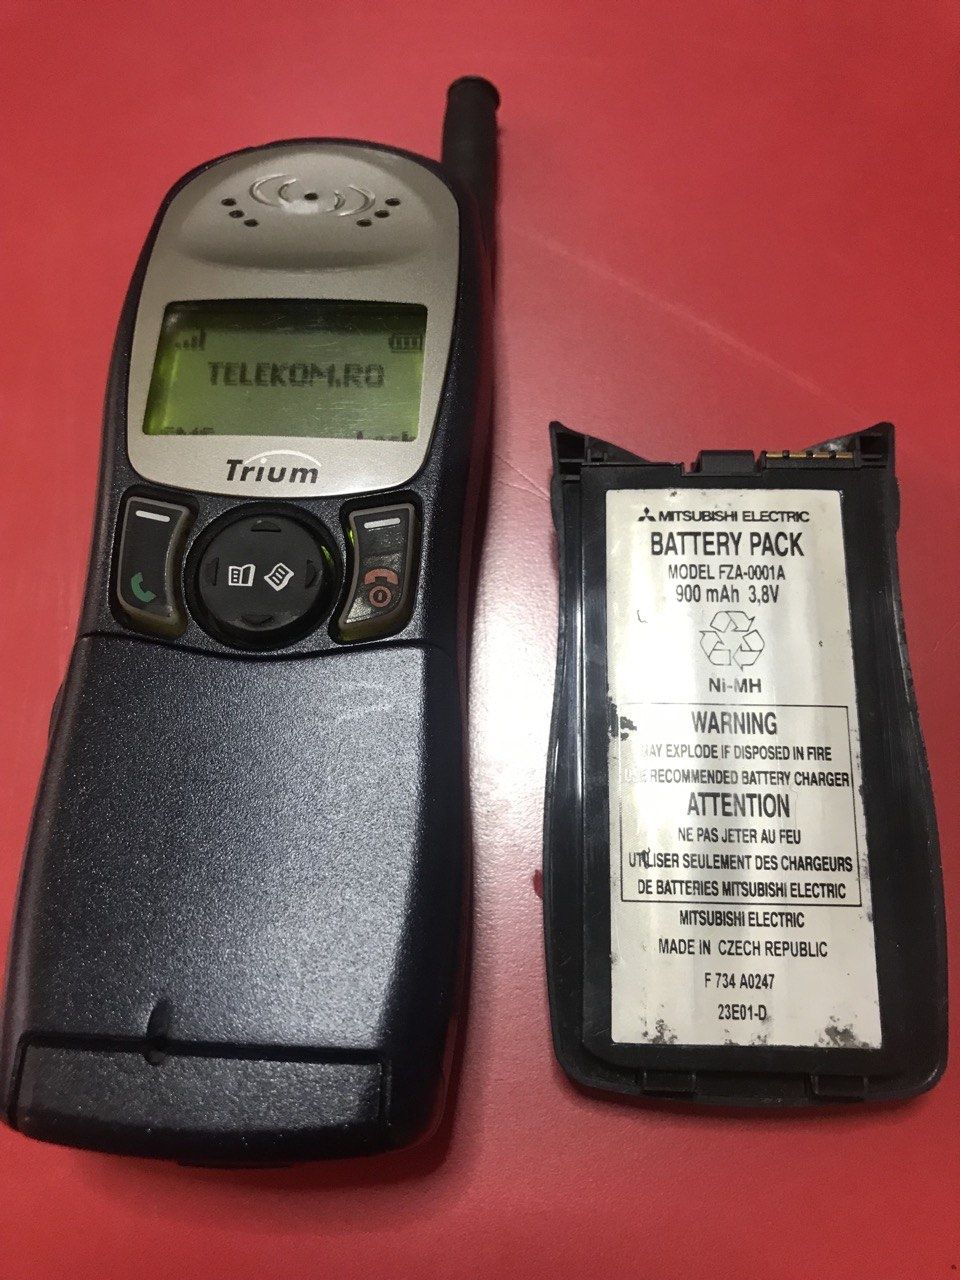 Telefon funcțional vechi de colecție